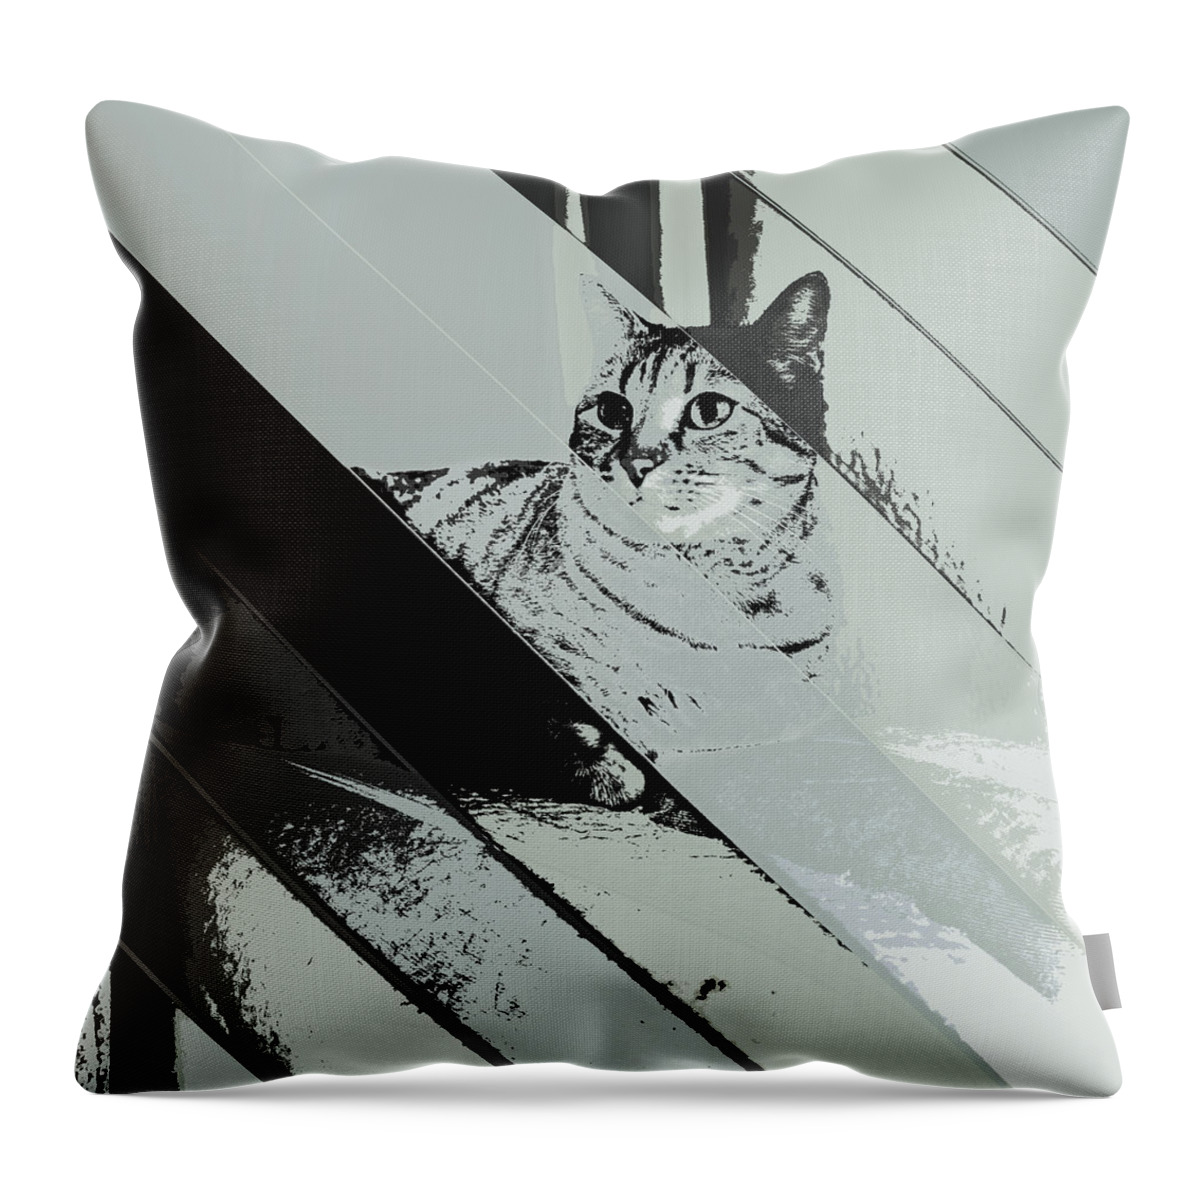 Artistic Throw Pillow featuring the digital art Yuli 1 by Marko Sabotin